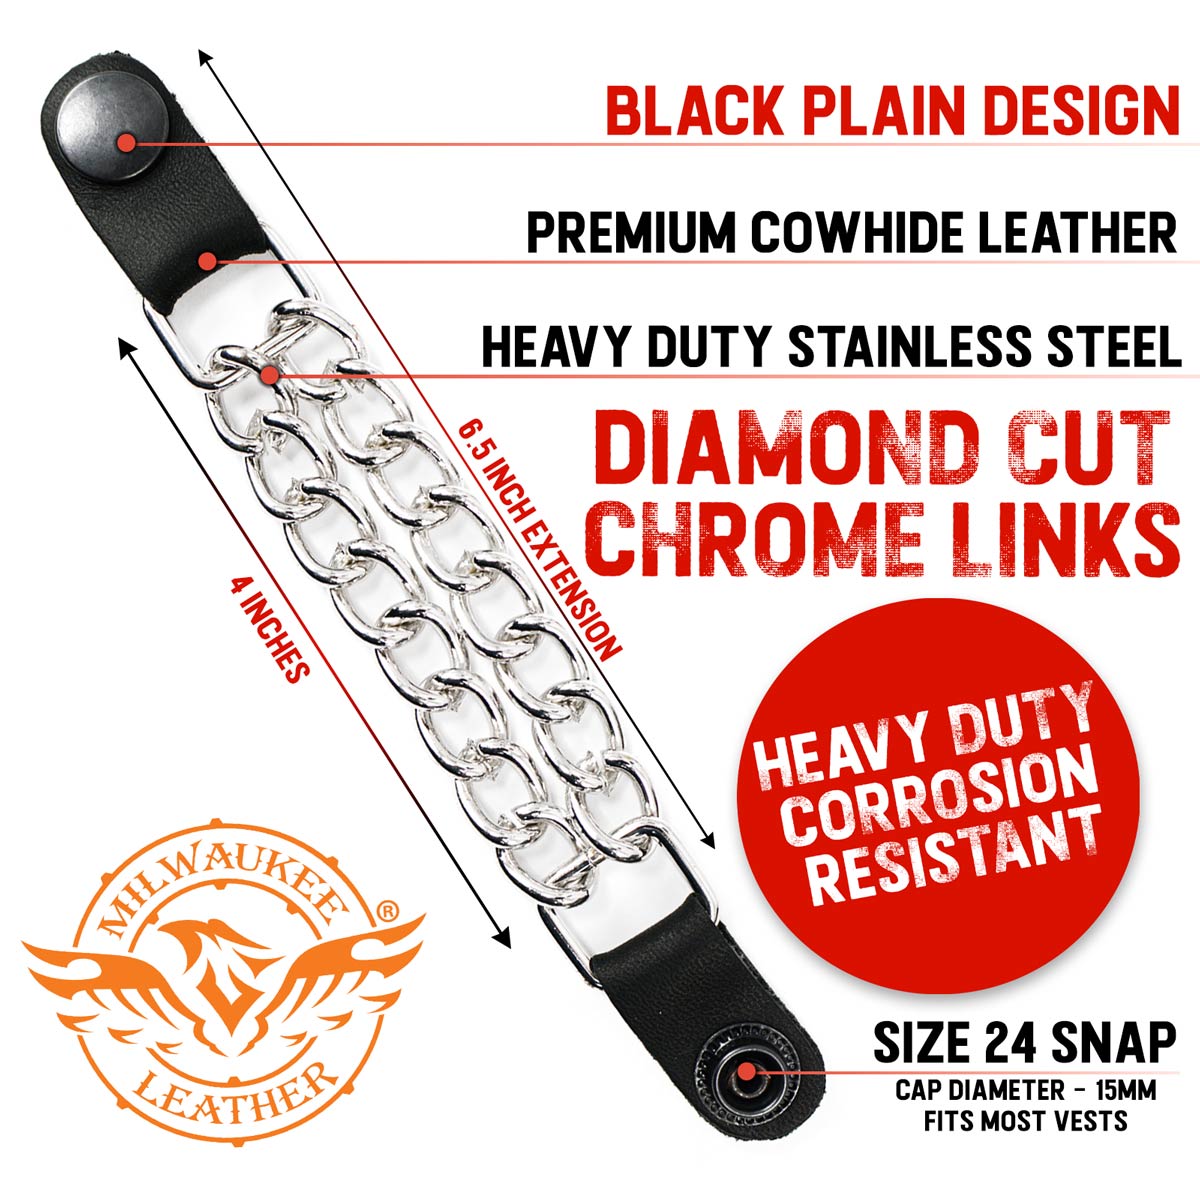 Milwaukee Leather Black Medallion Vest Extender - Double Chrome Chains Genuine Leather 6.5" Extension 4-PCS MLA6016SET